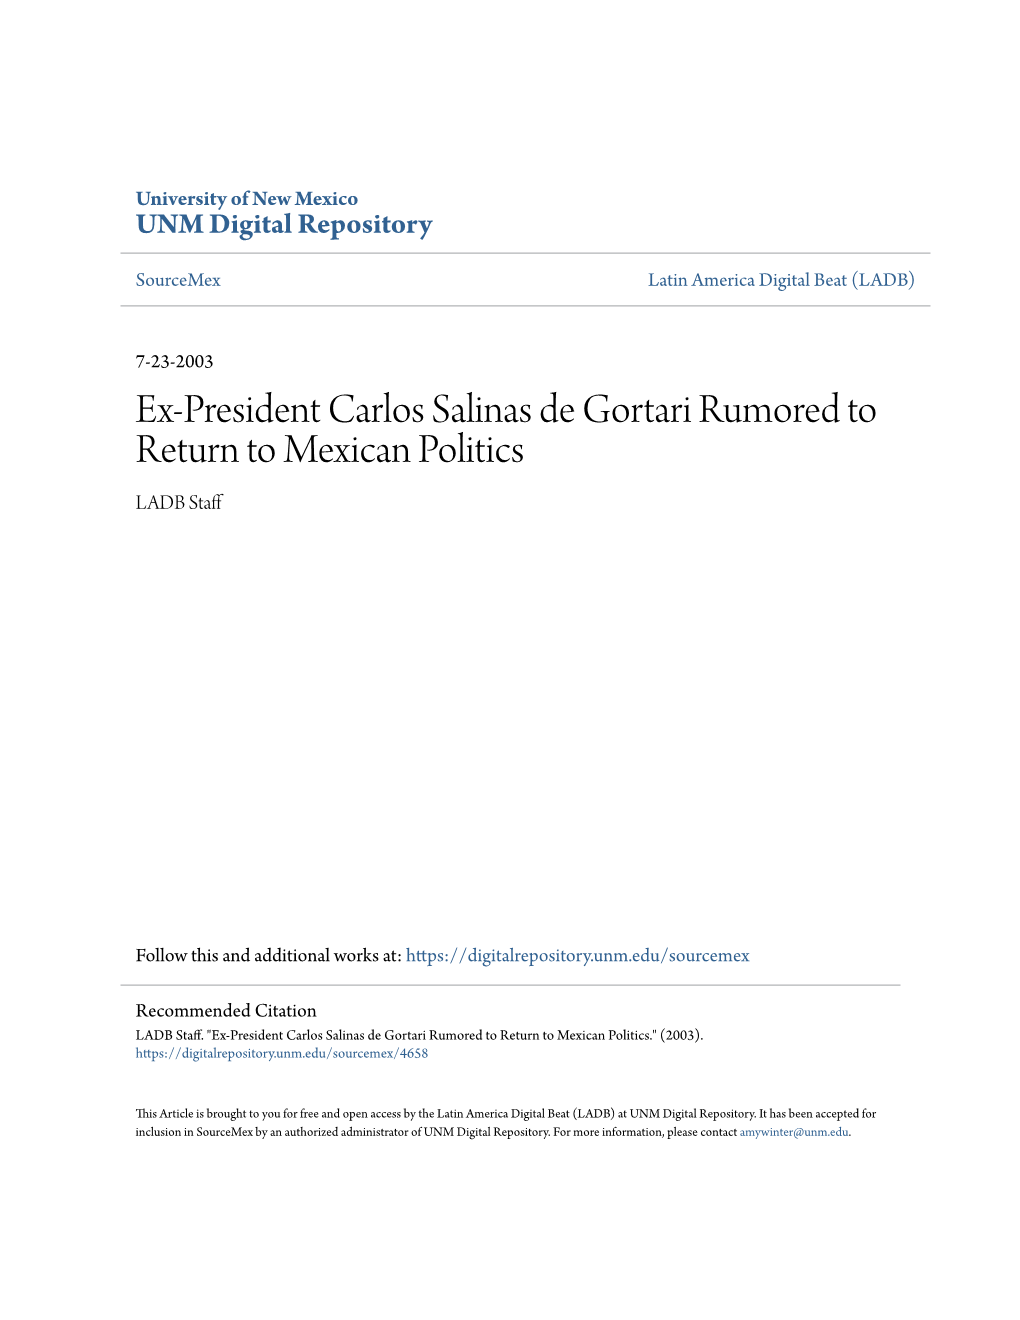 Ex-President Carlos Salinas De Gortari Rumored to Return to Mexican Politics LADB Staff